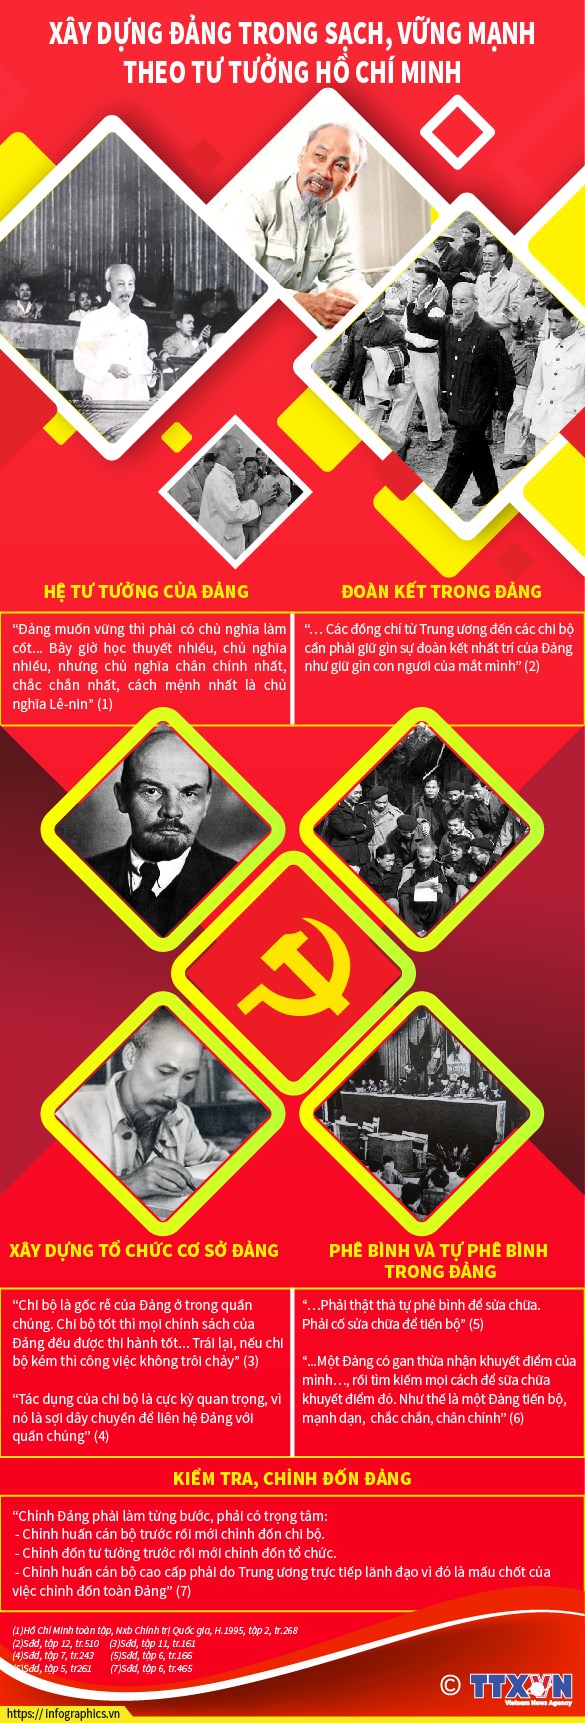 [Infographics] Xay dung Dang trong sach theo tu tuong Ho Chi Minh hinh anh 1